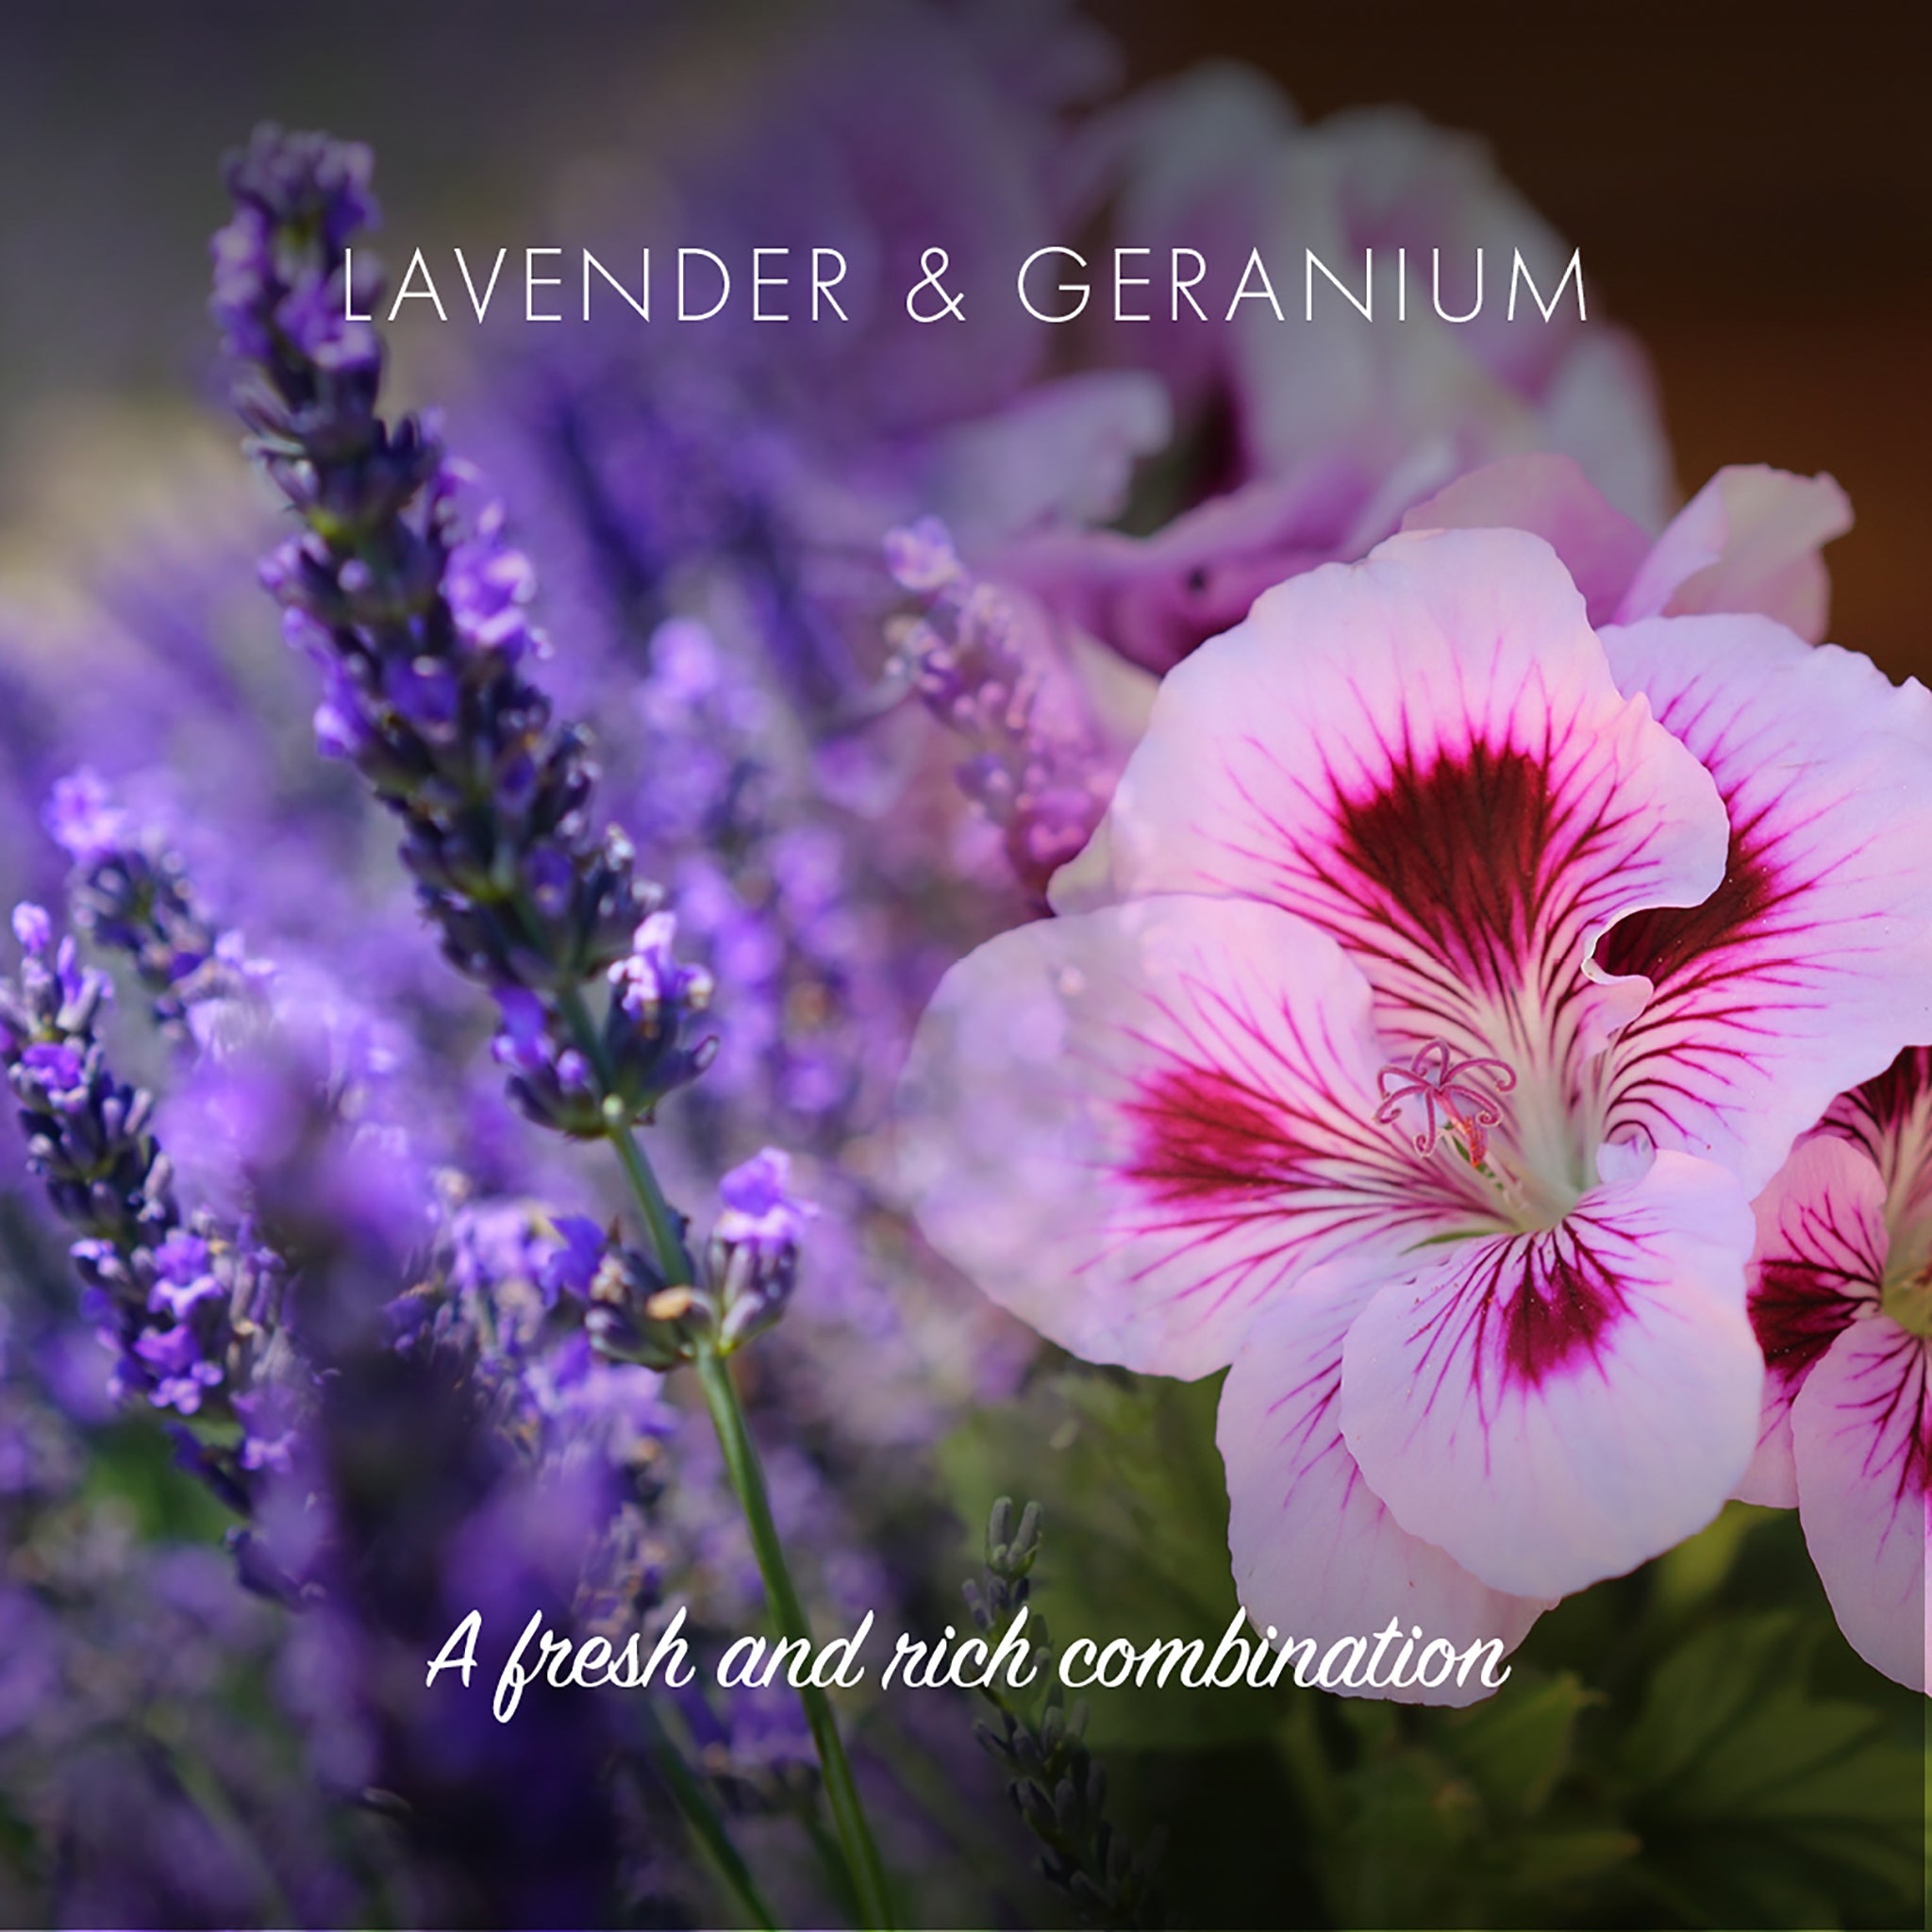 Healthy Shine Shampoo Bar - Lavender & Geranium - mypure.co.uk